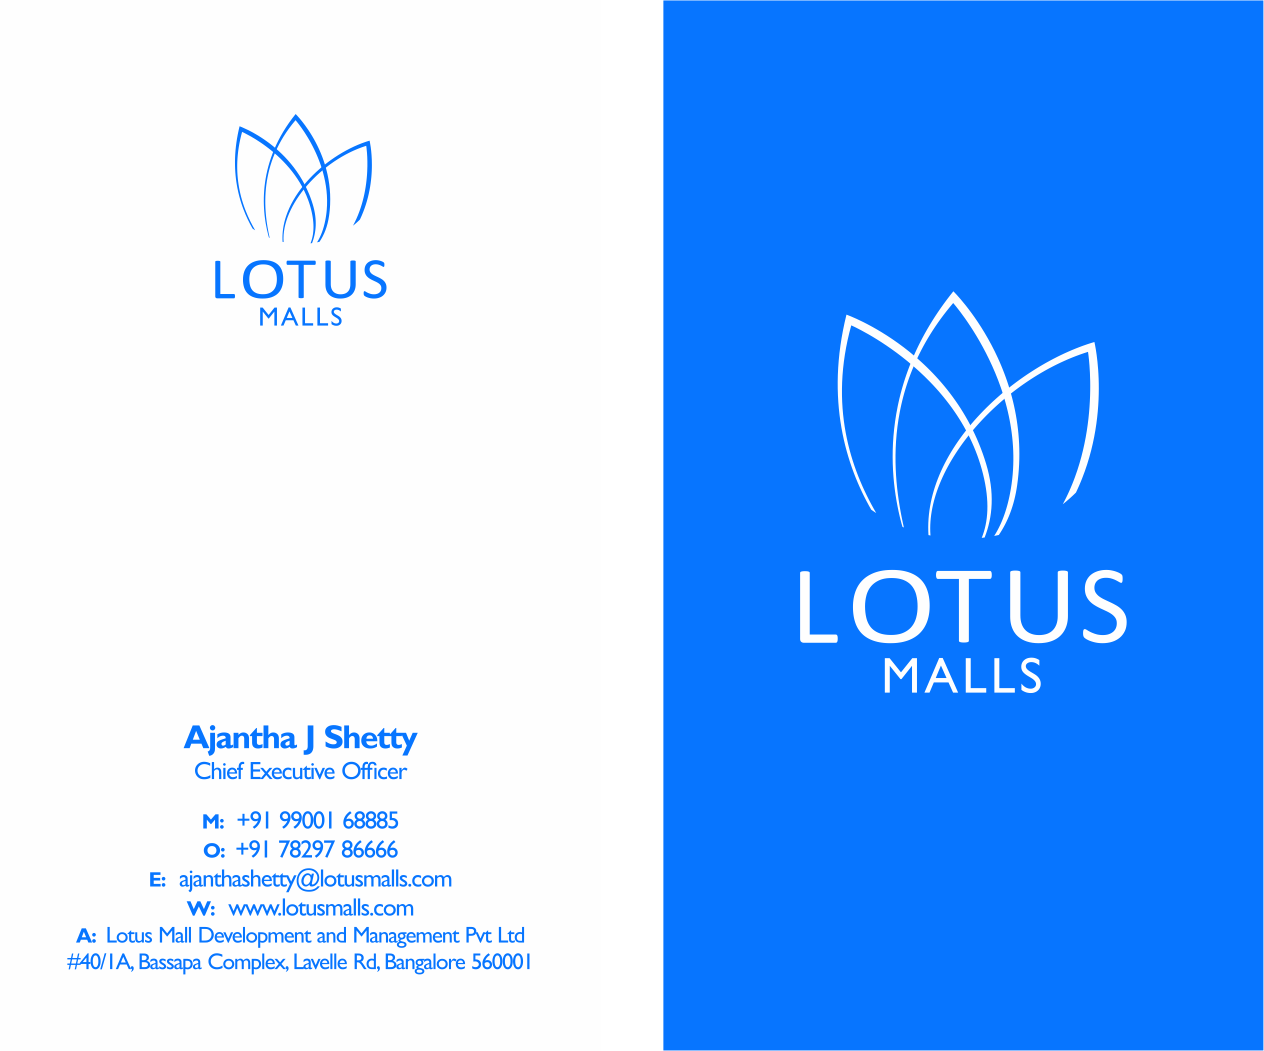 Lotus Malls